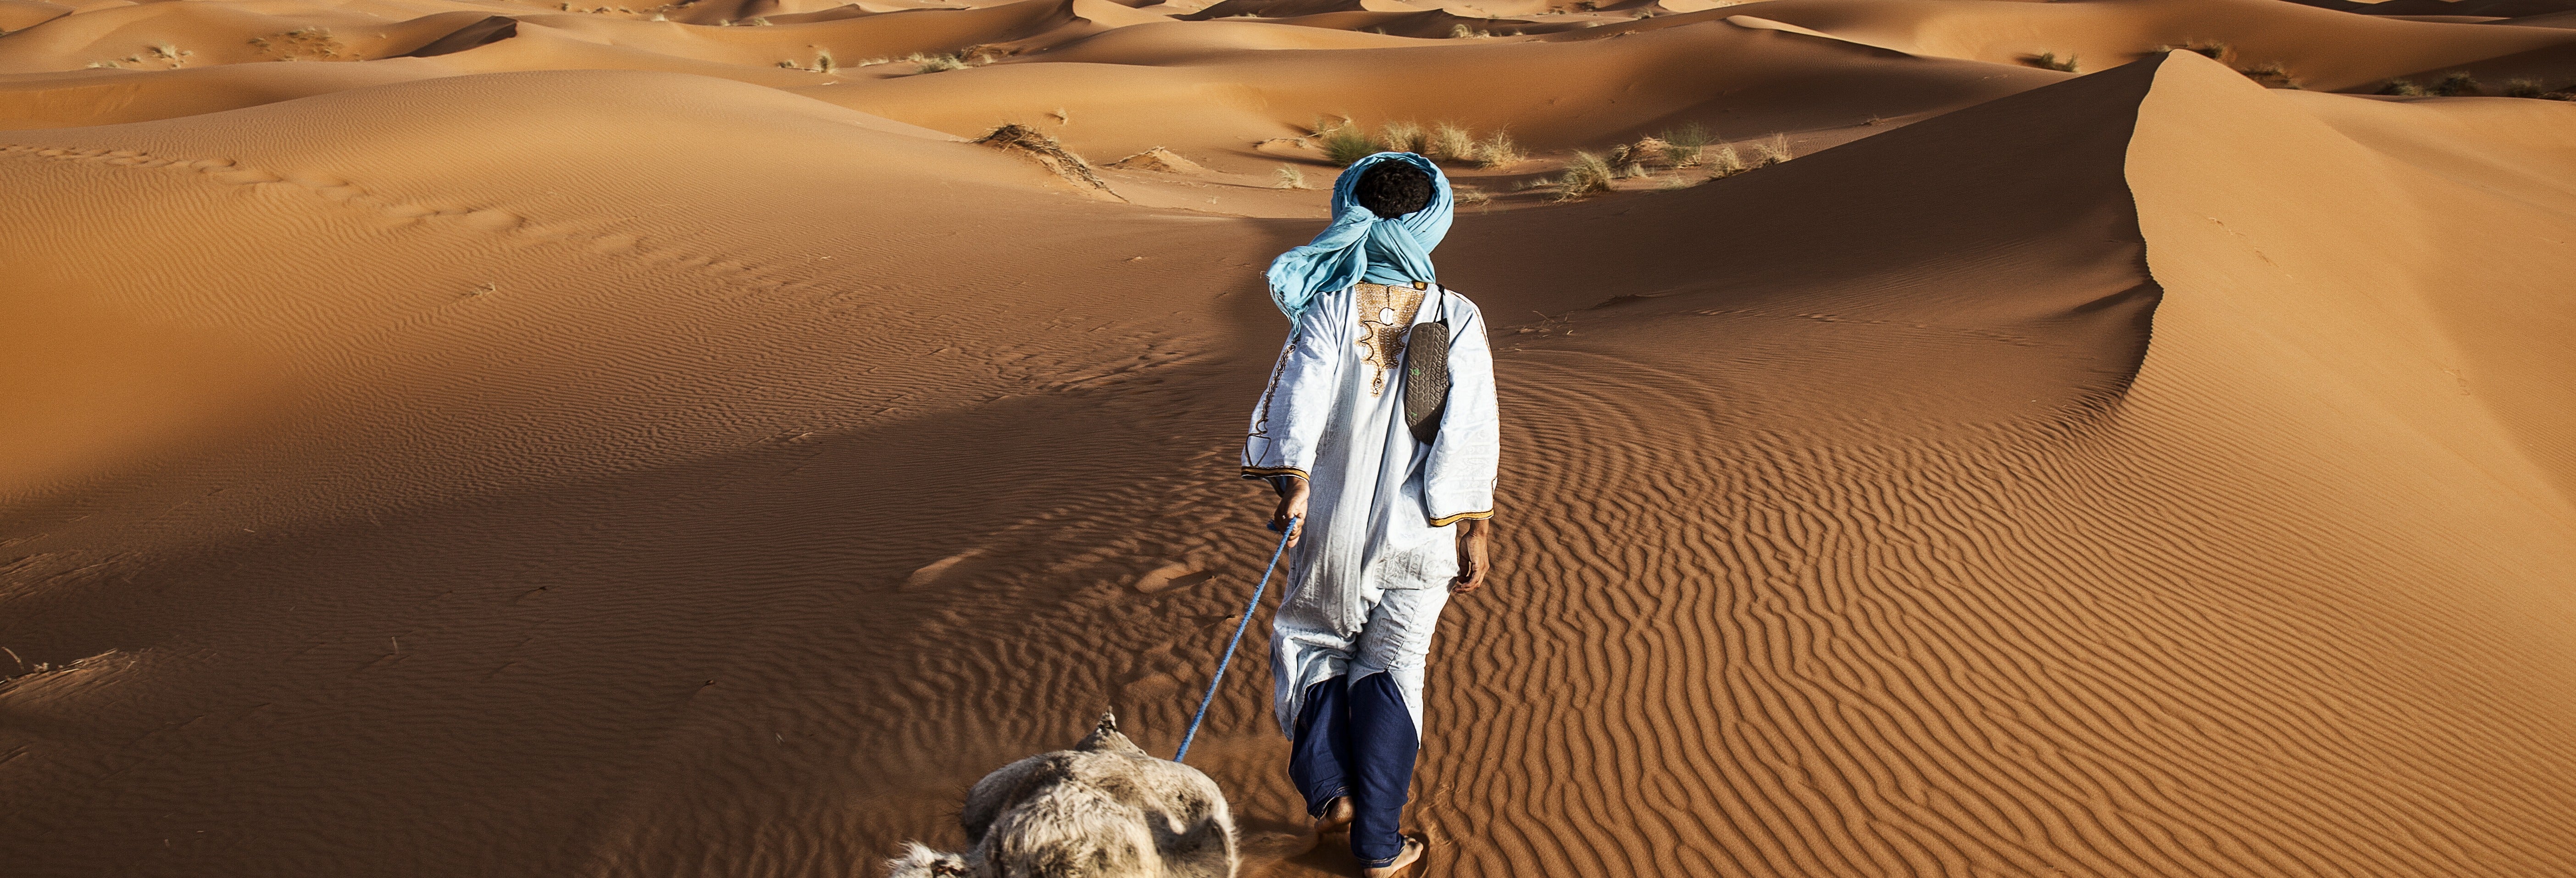 3 Day Sahara Desert Tour